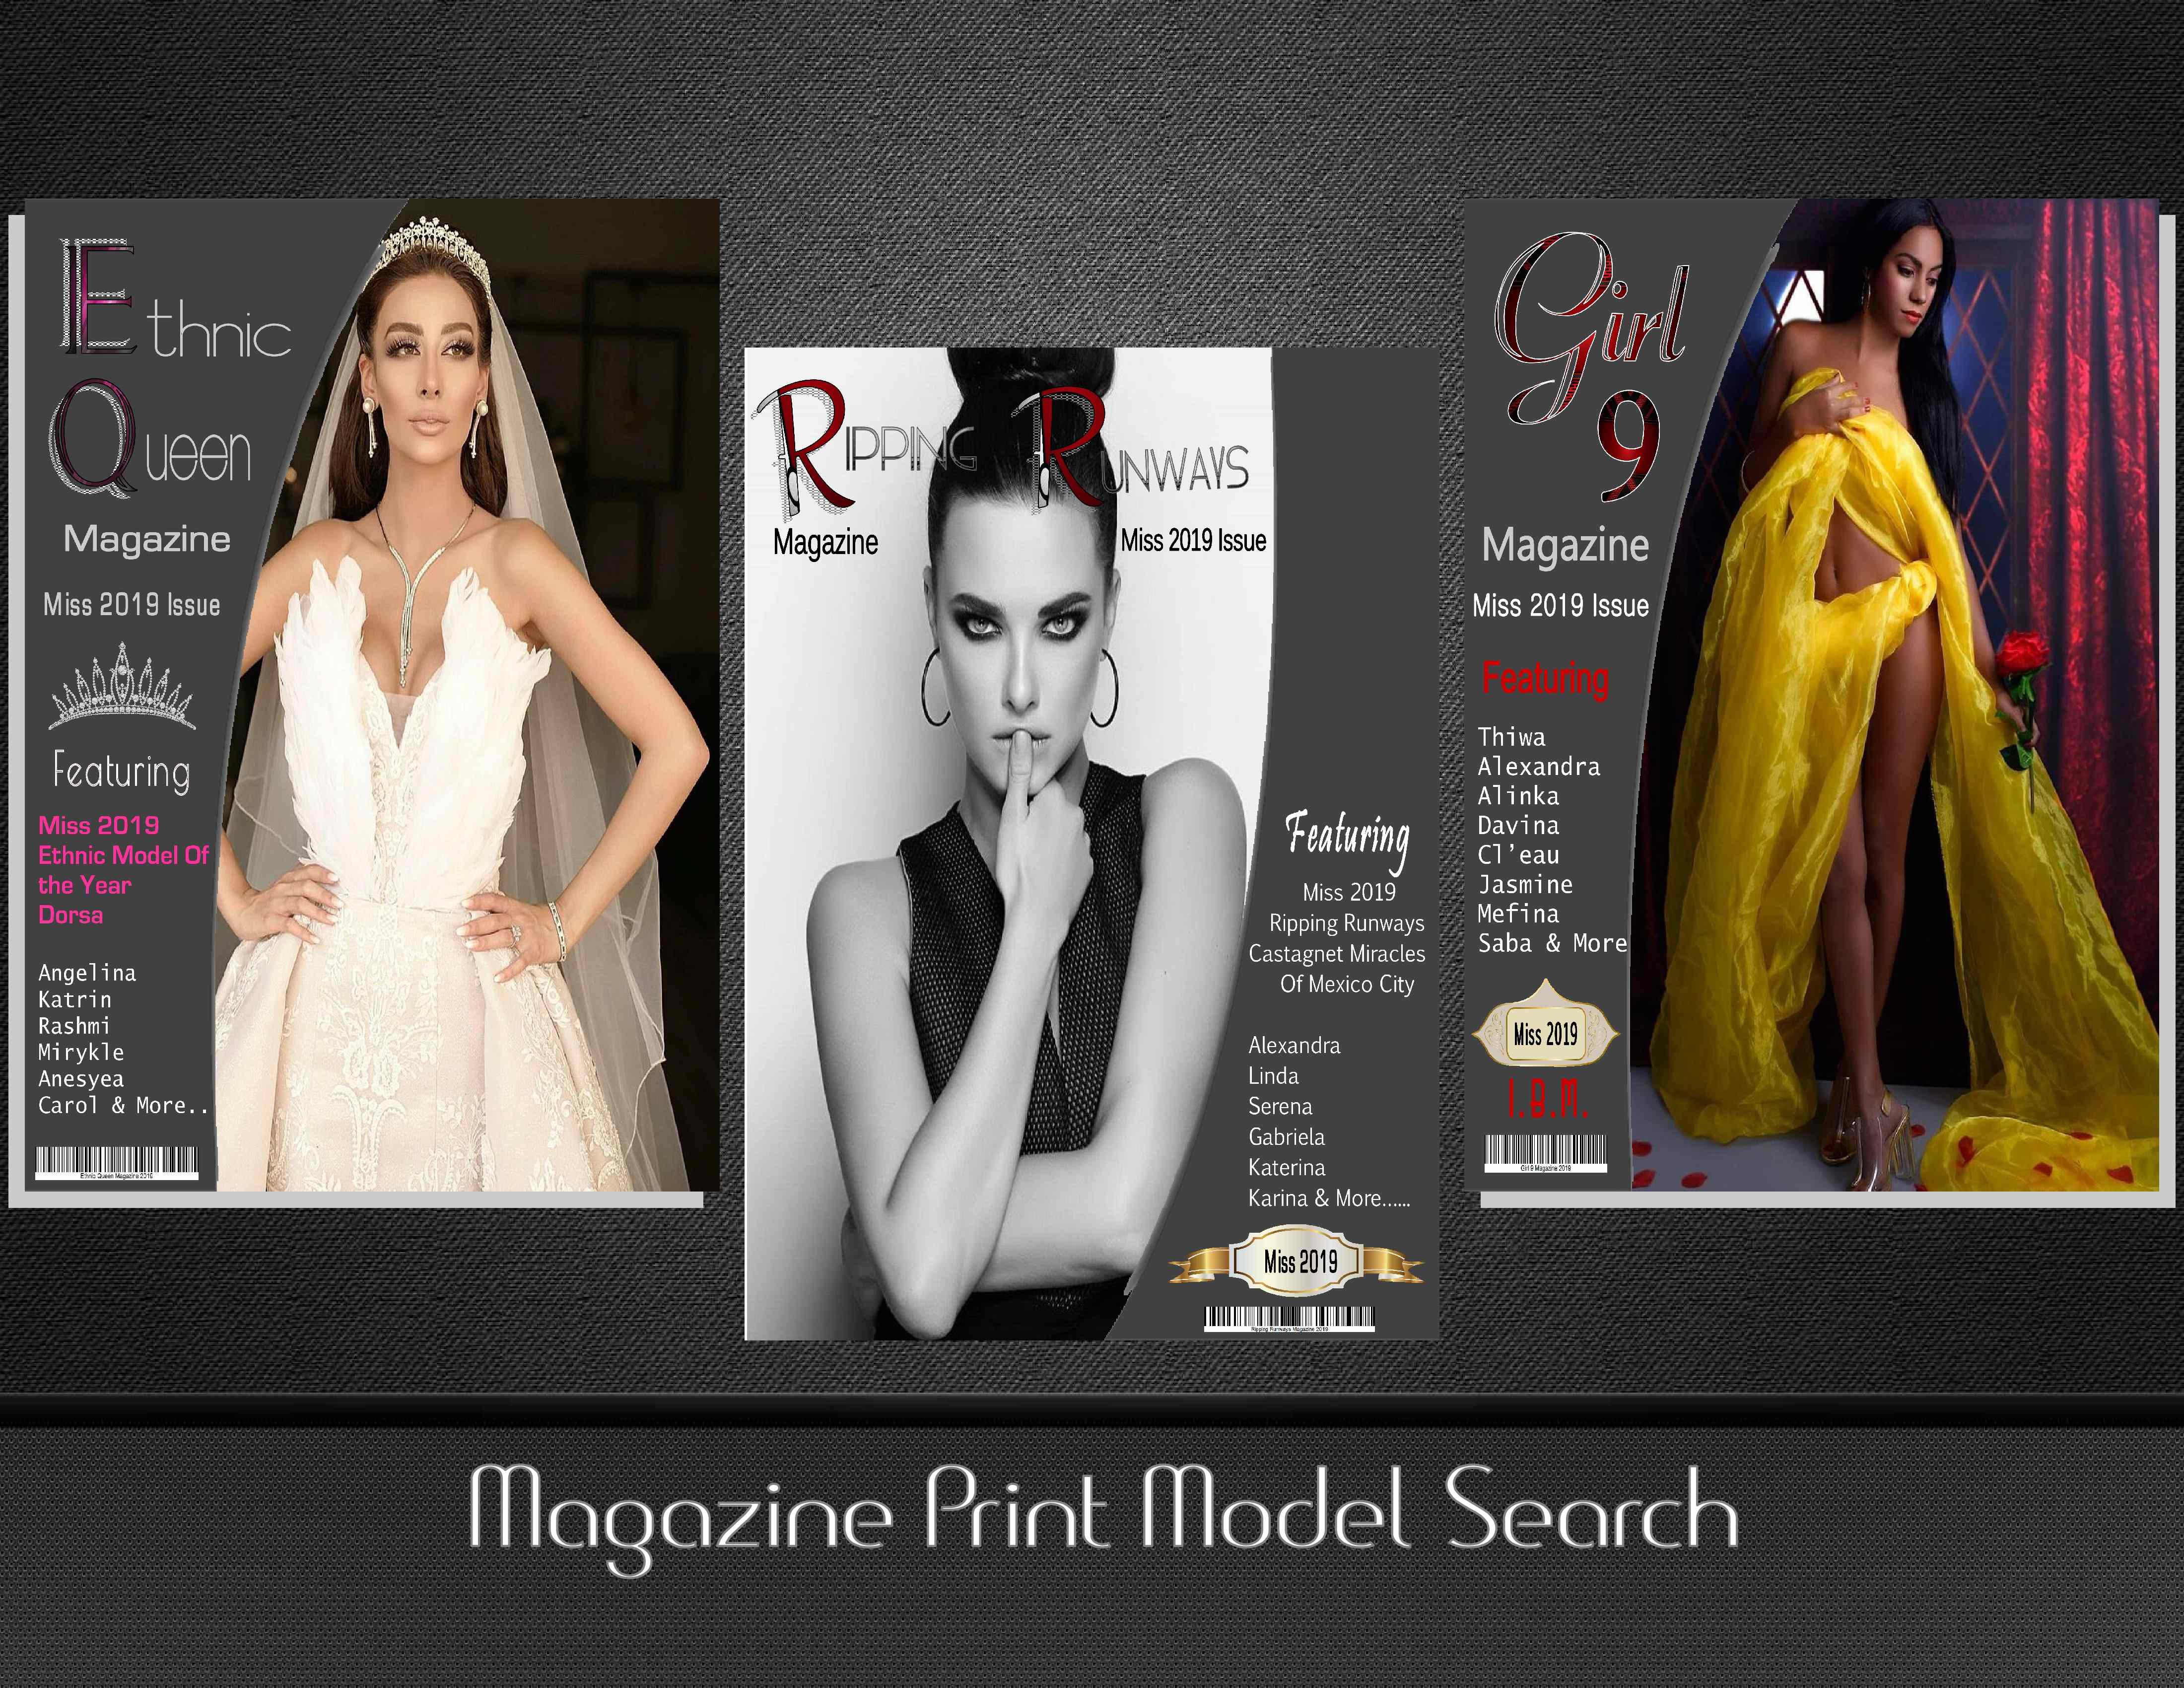 2019 Free Modeling Magazine Online Model Photo Contest casting job at